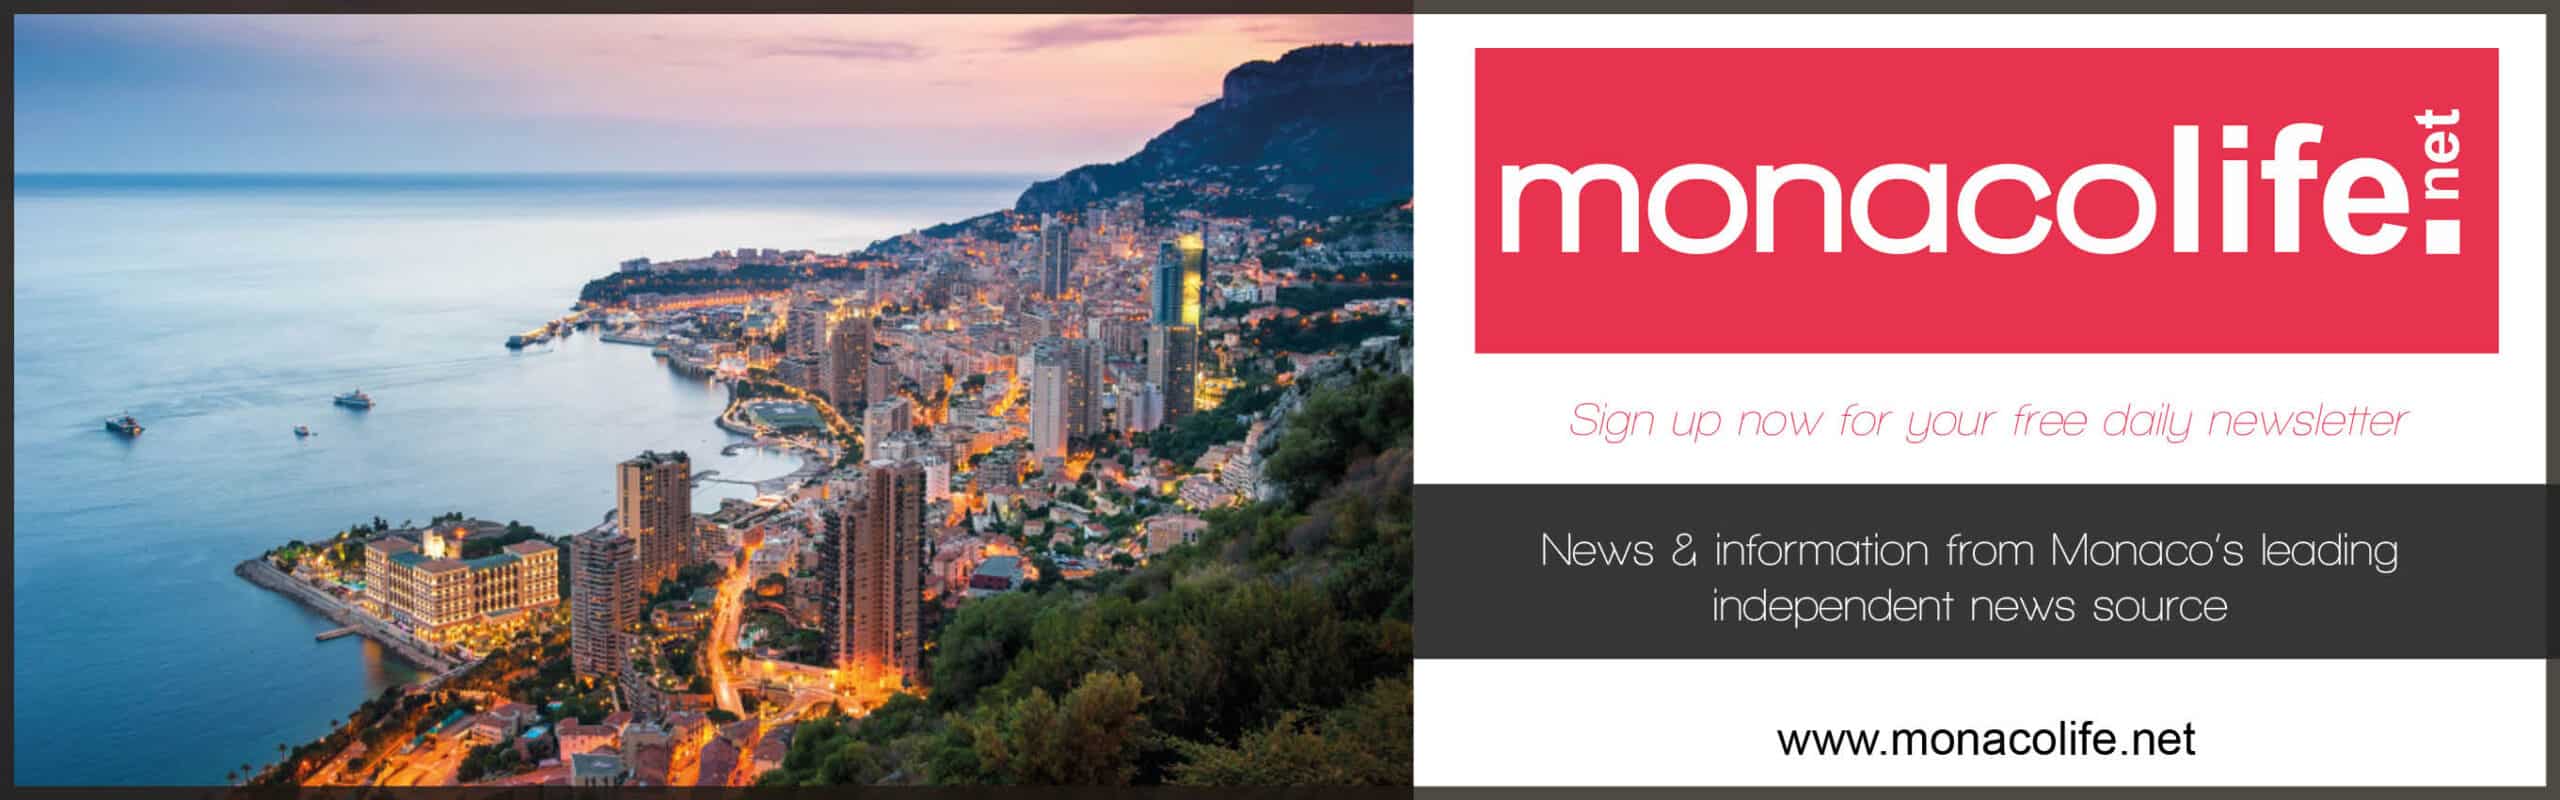 Monaco Life web banner